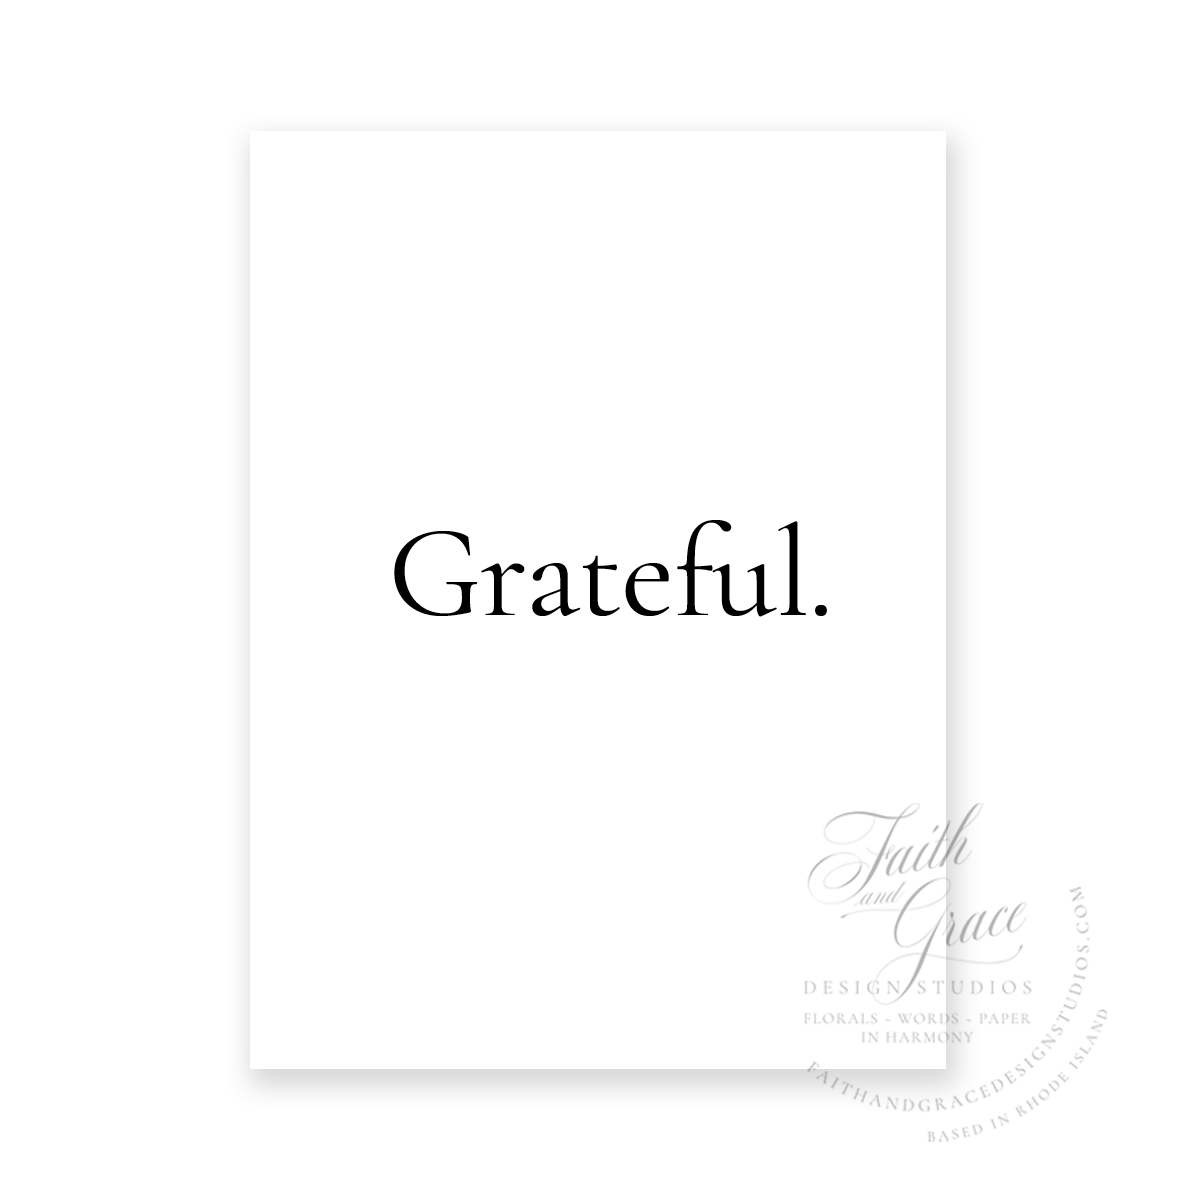 Grateful in black classic serif typeface on white felt stock Greeting Card